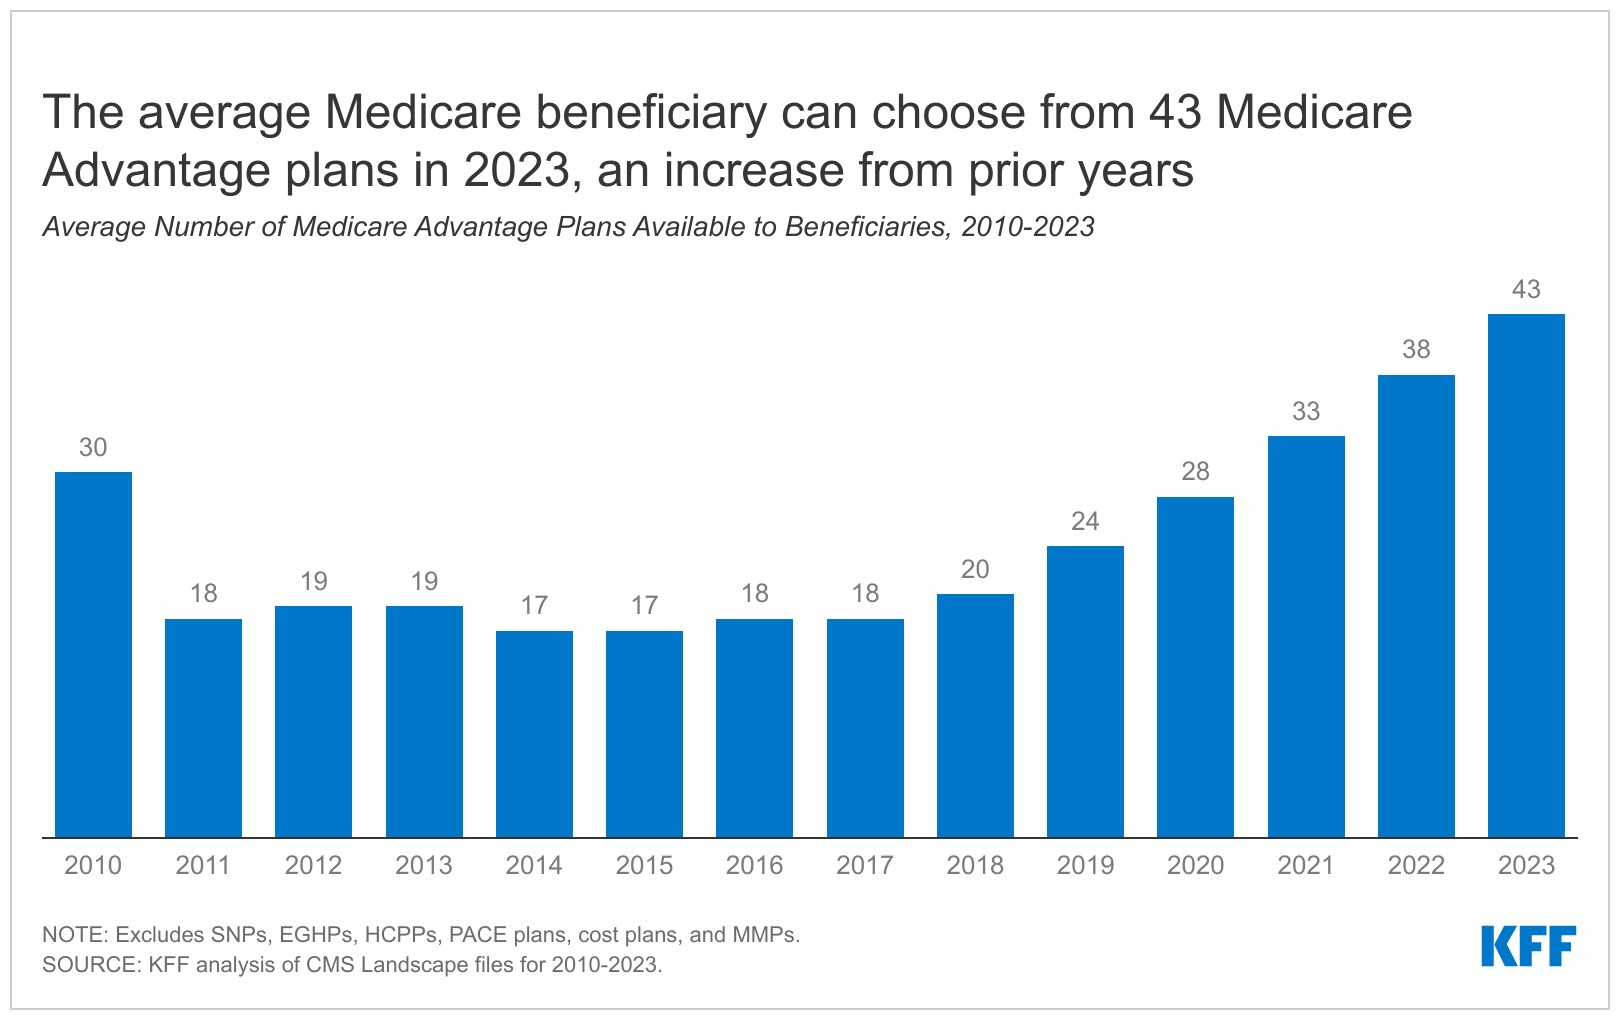 The Average Medicare Beneficiary Has a Choice of 43 Medicare Advantage